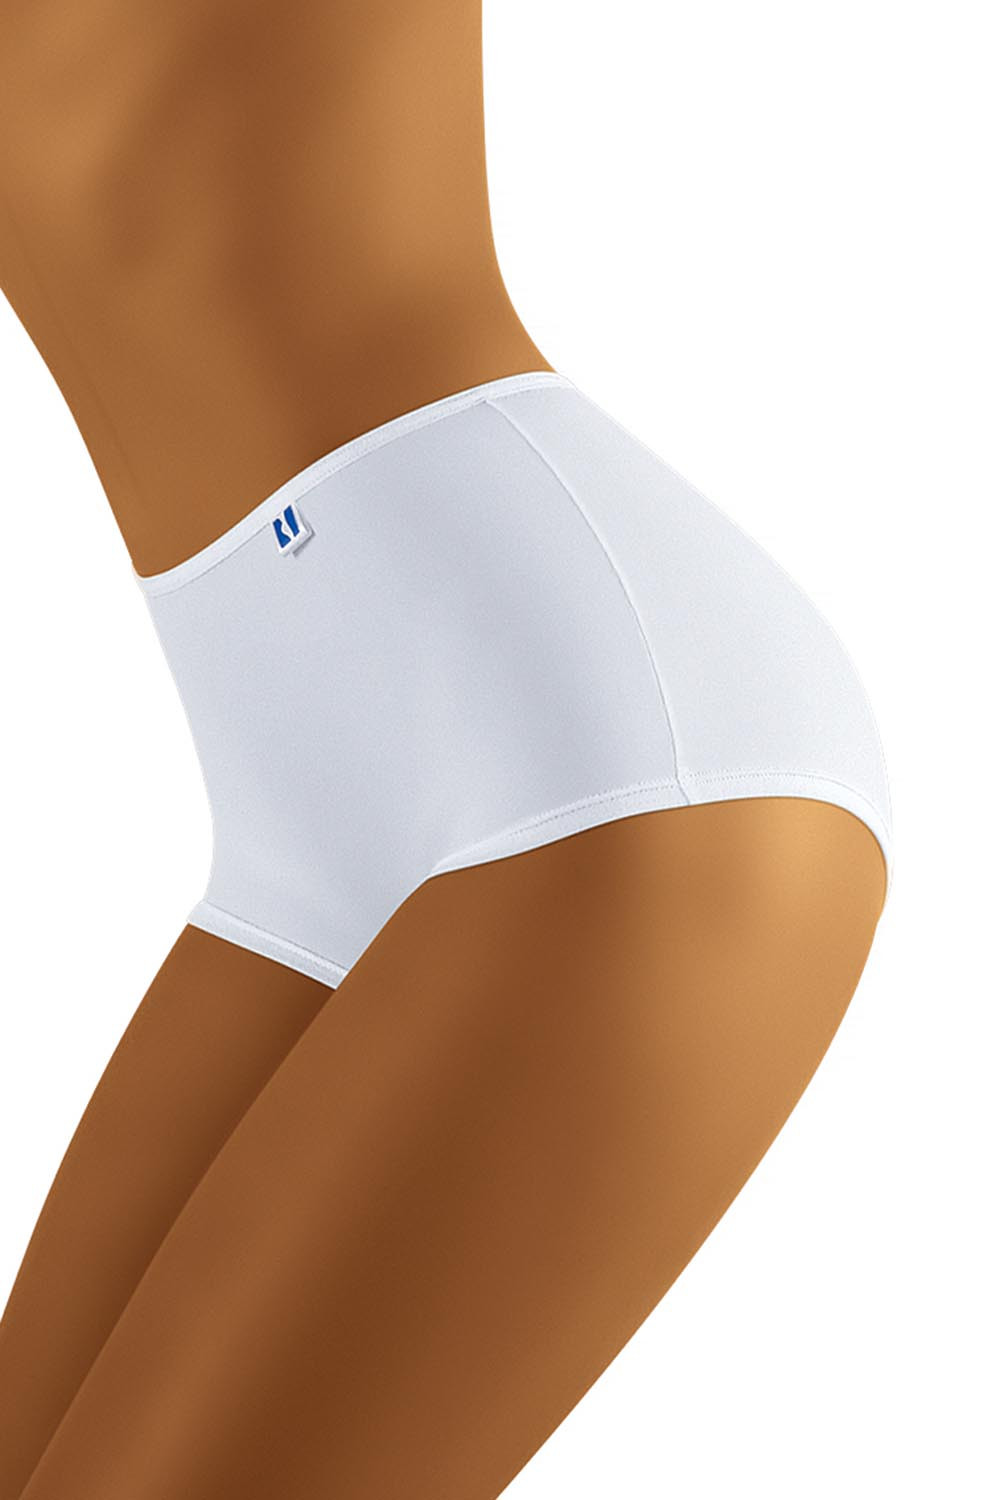 Wol-Bar Tahoo Shorts kolor:biały XL